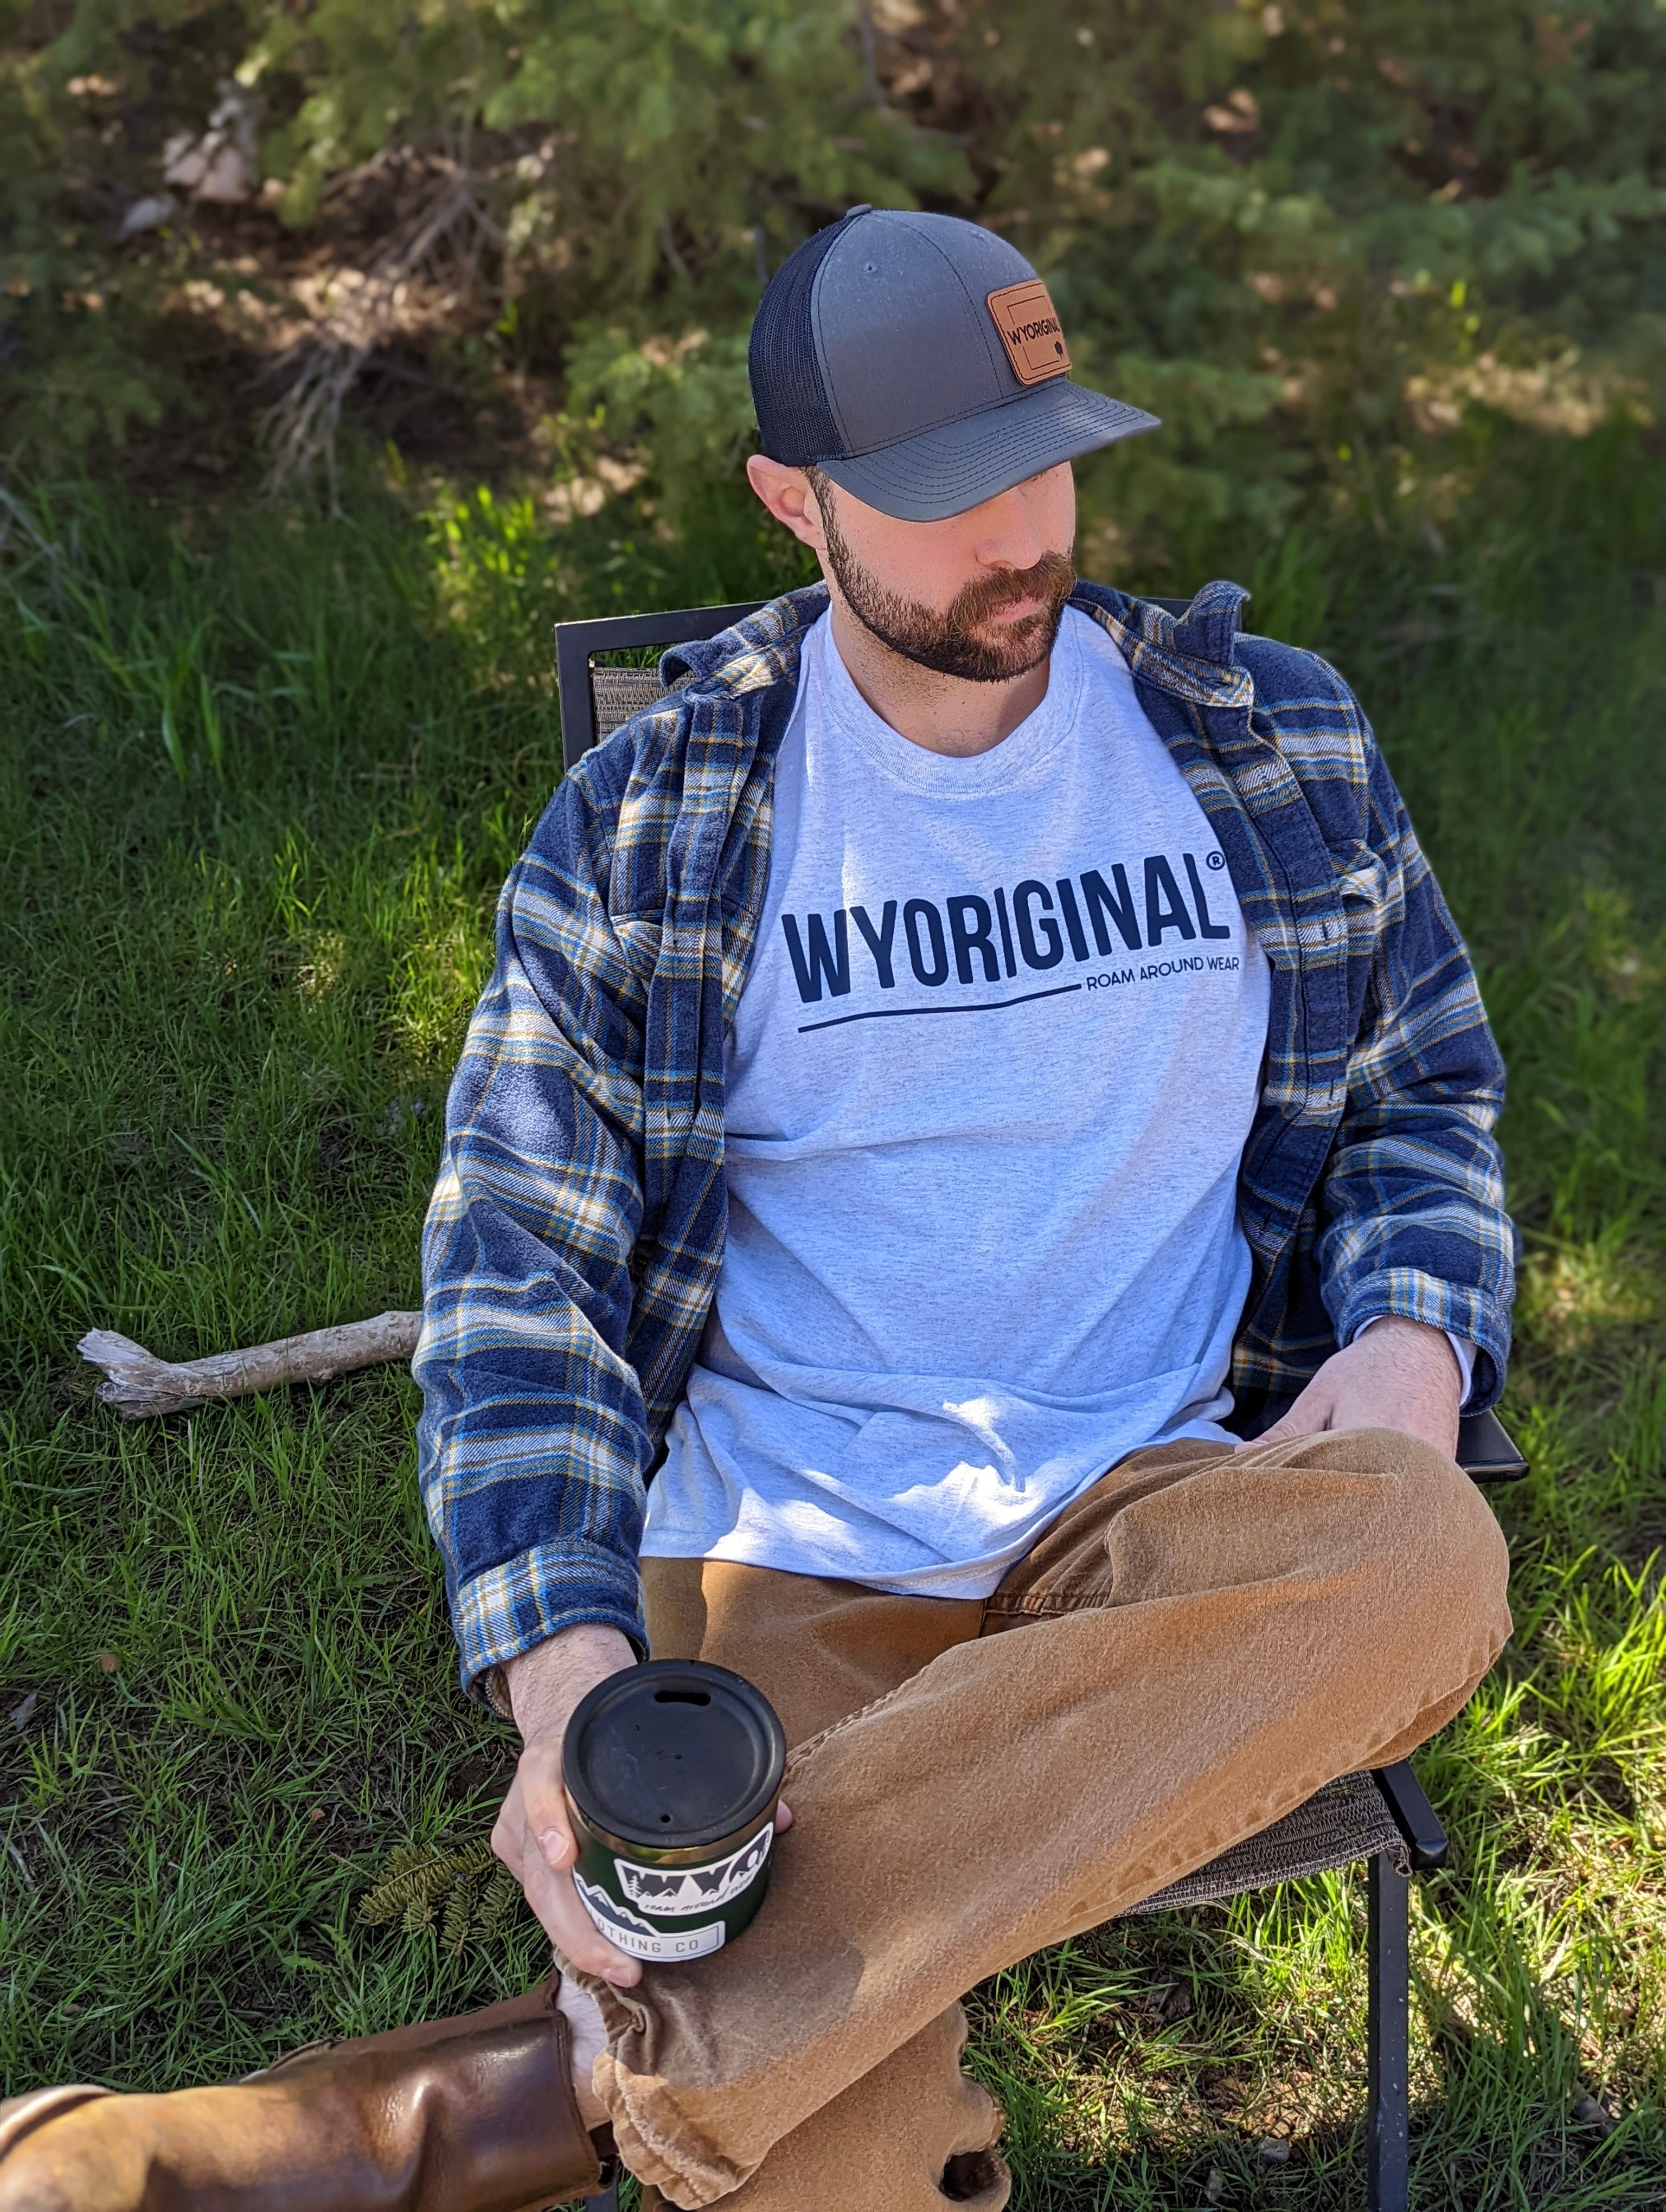 Roam Around Wear a Wyoming T-Shirt Company. WYORIGINAL®